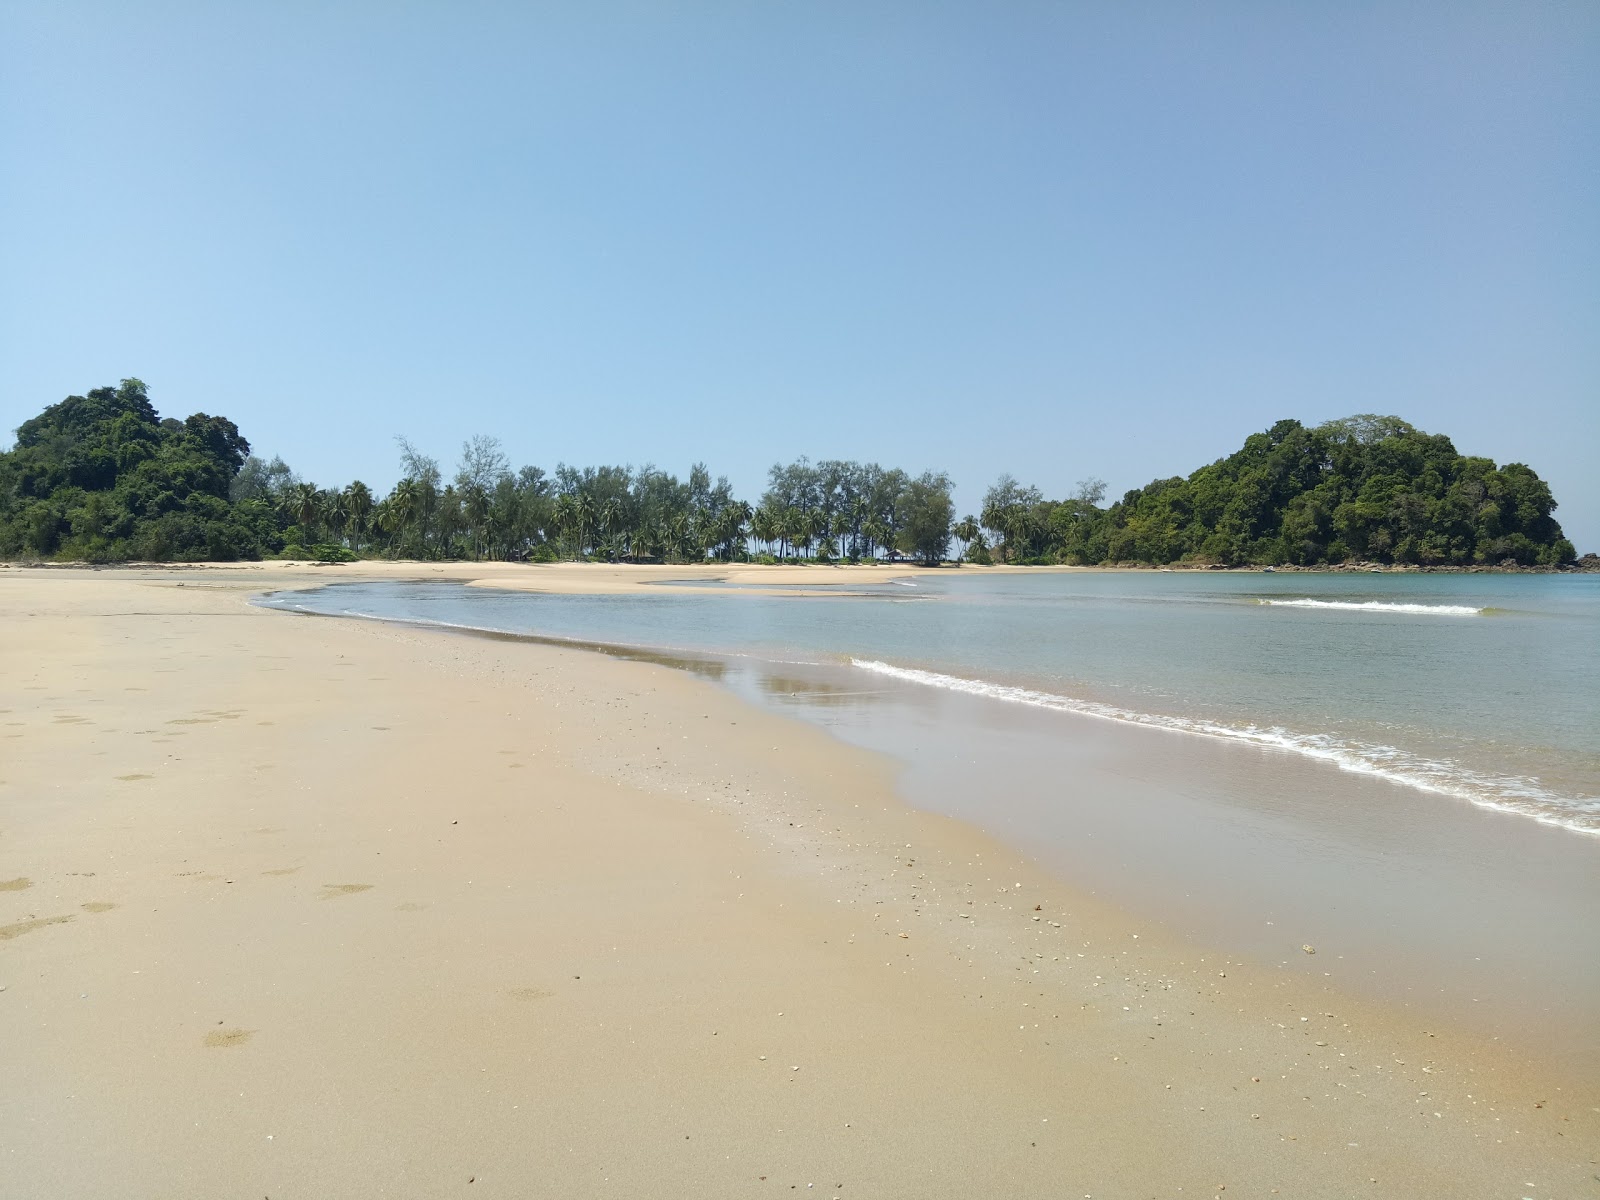 Foto di Phrathong Beach ubicato in zona naturale